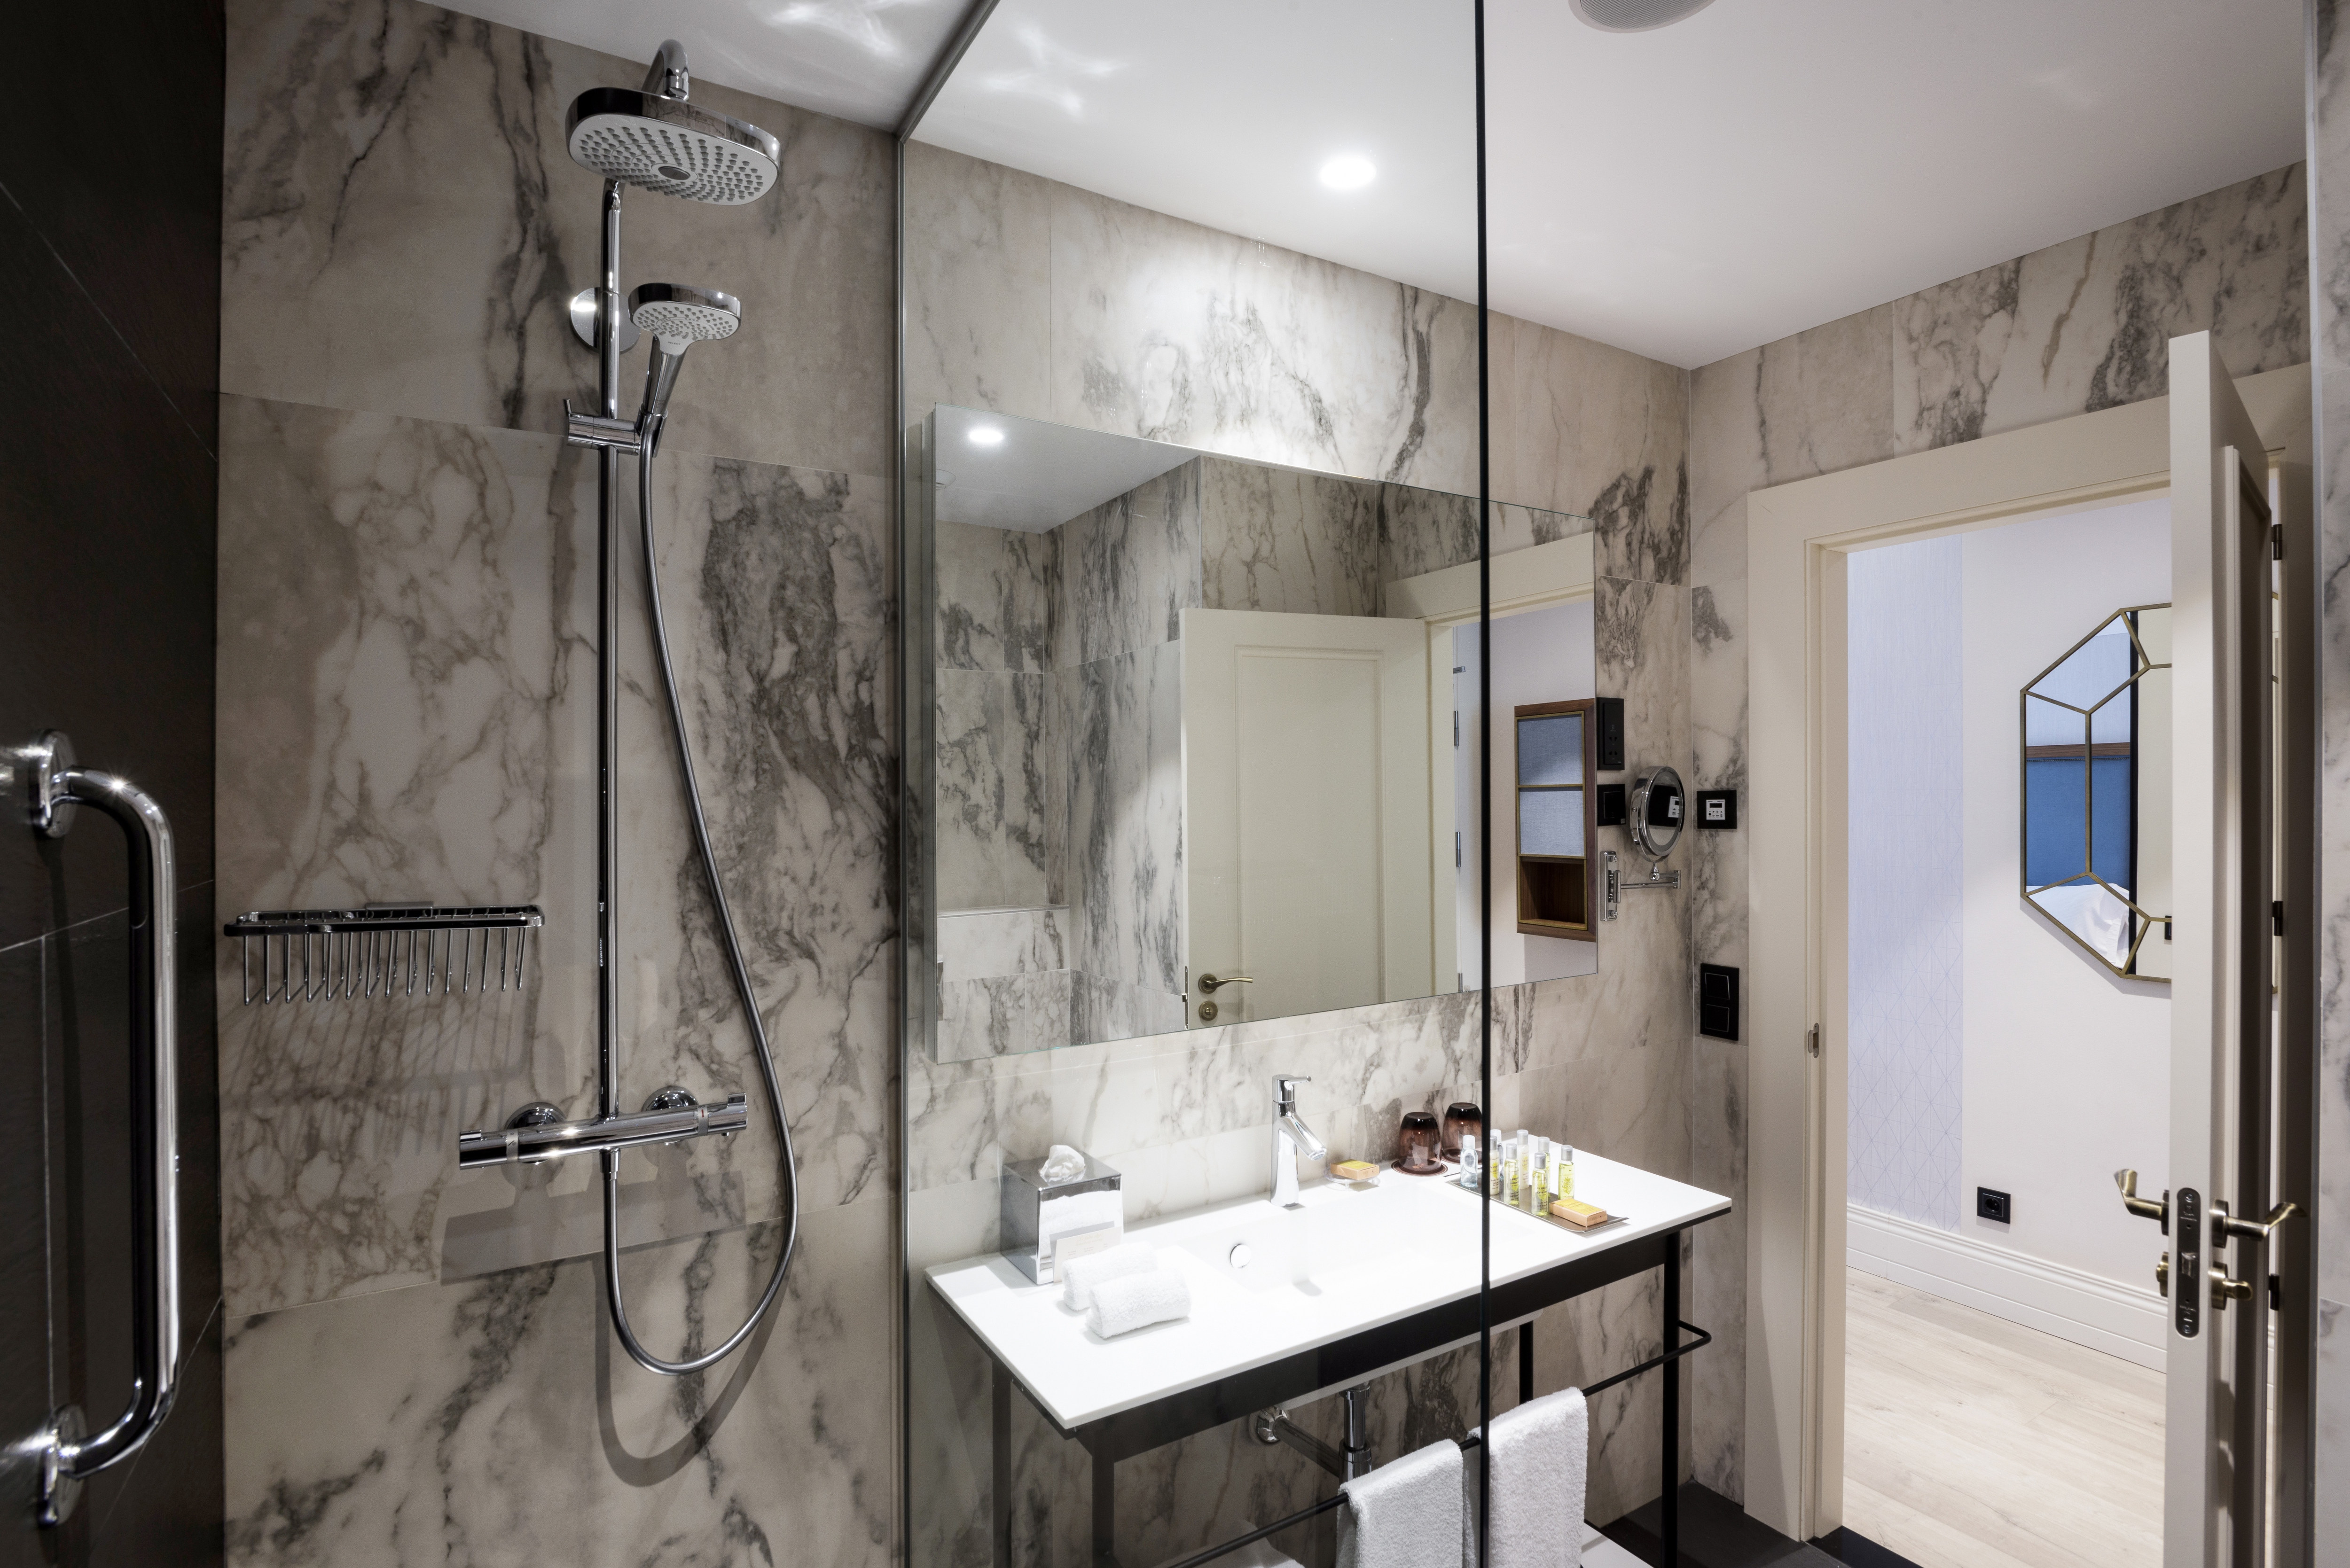 Shower With Glass Doors, Large Vanity Mirror, Sink, Fresh Towels, and Toiletries in Superior Bathroom With Open Doorway to Bedroom